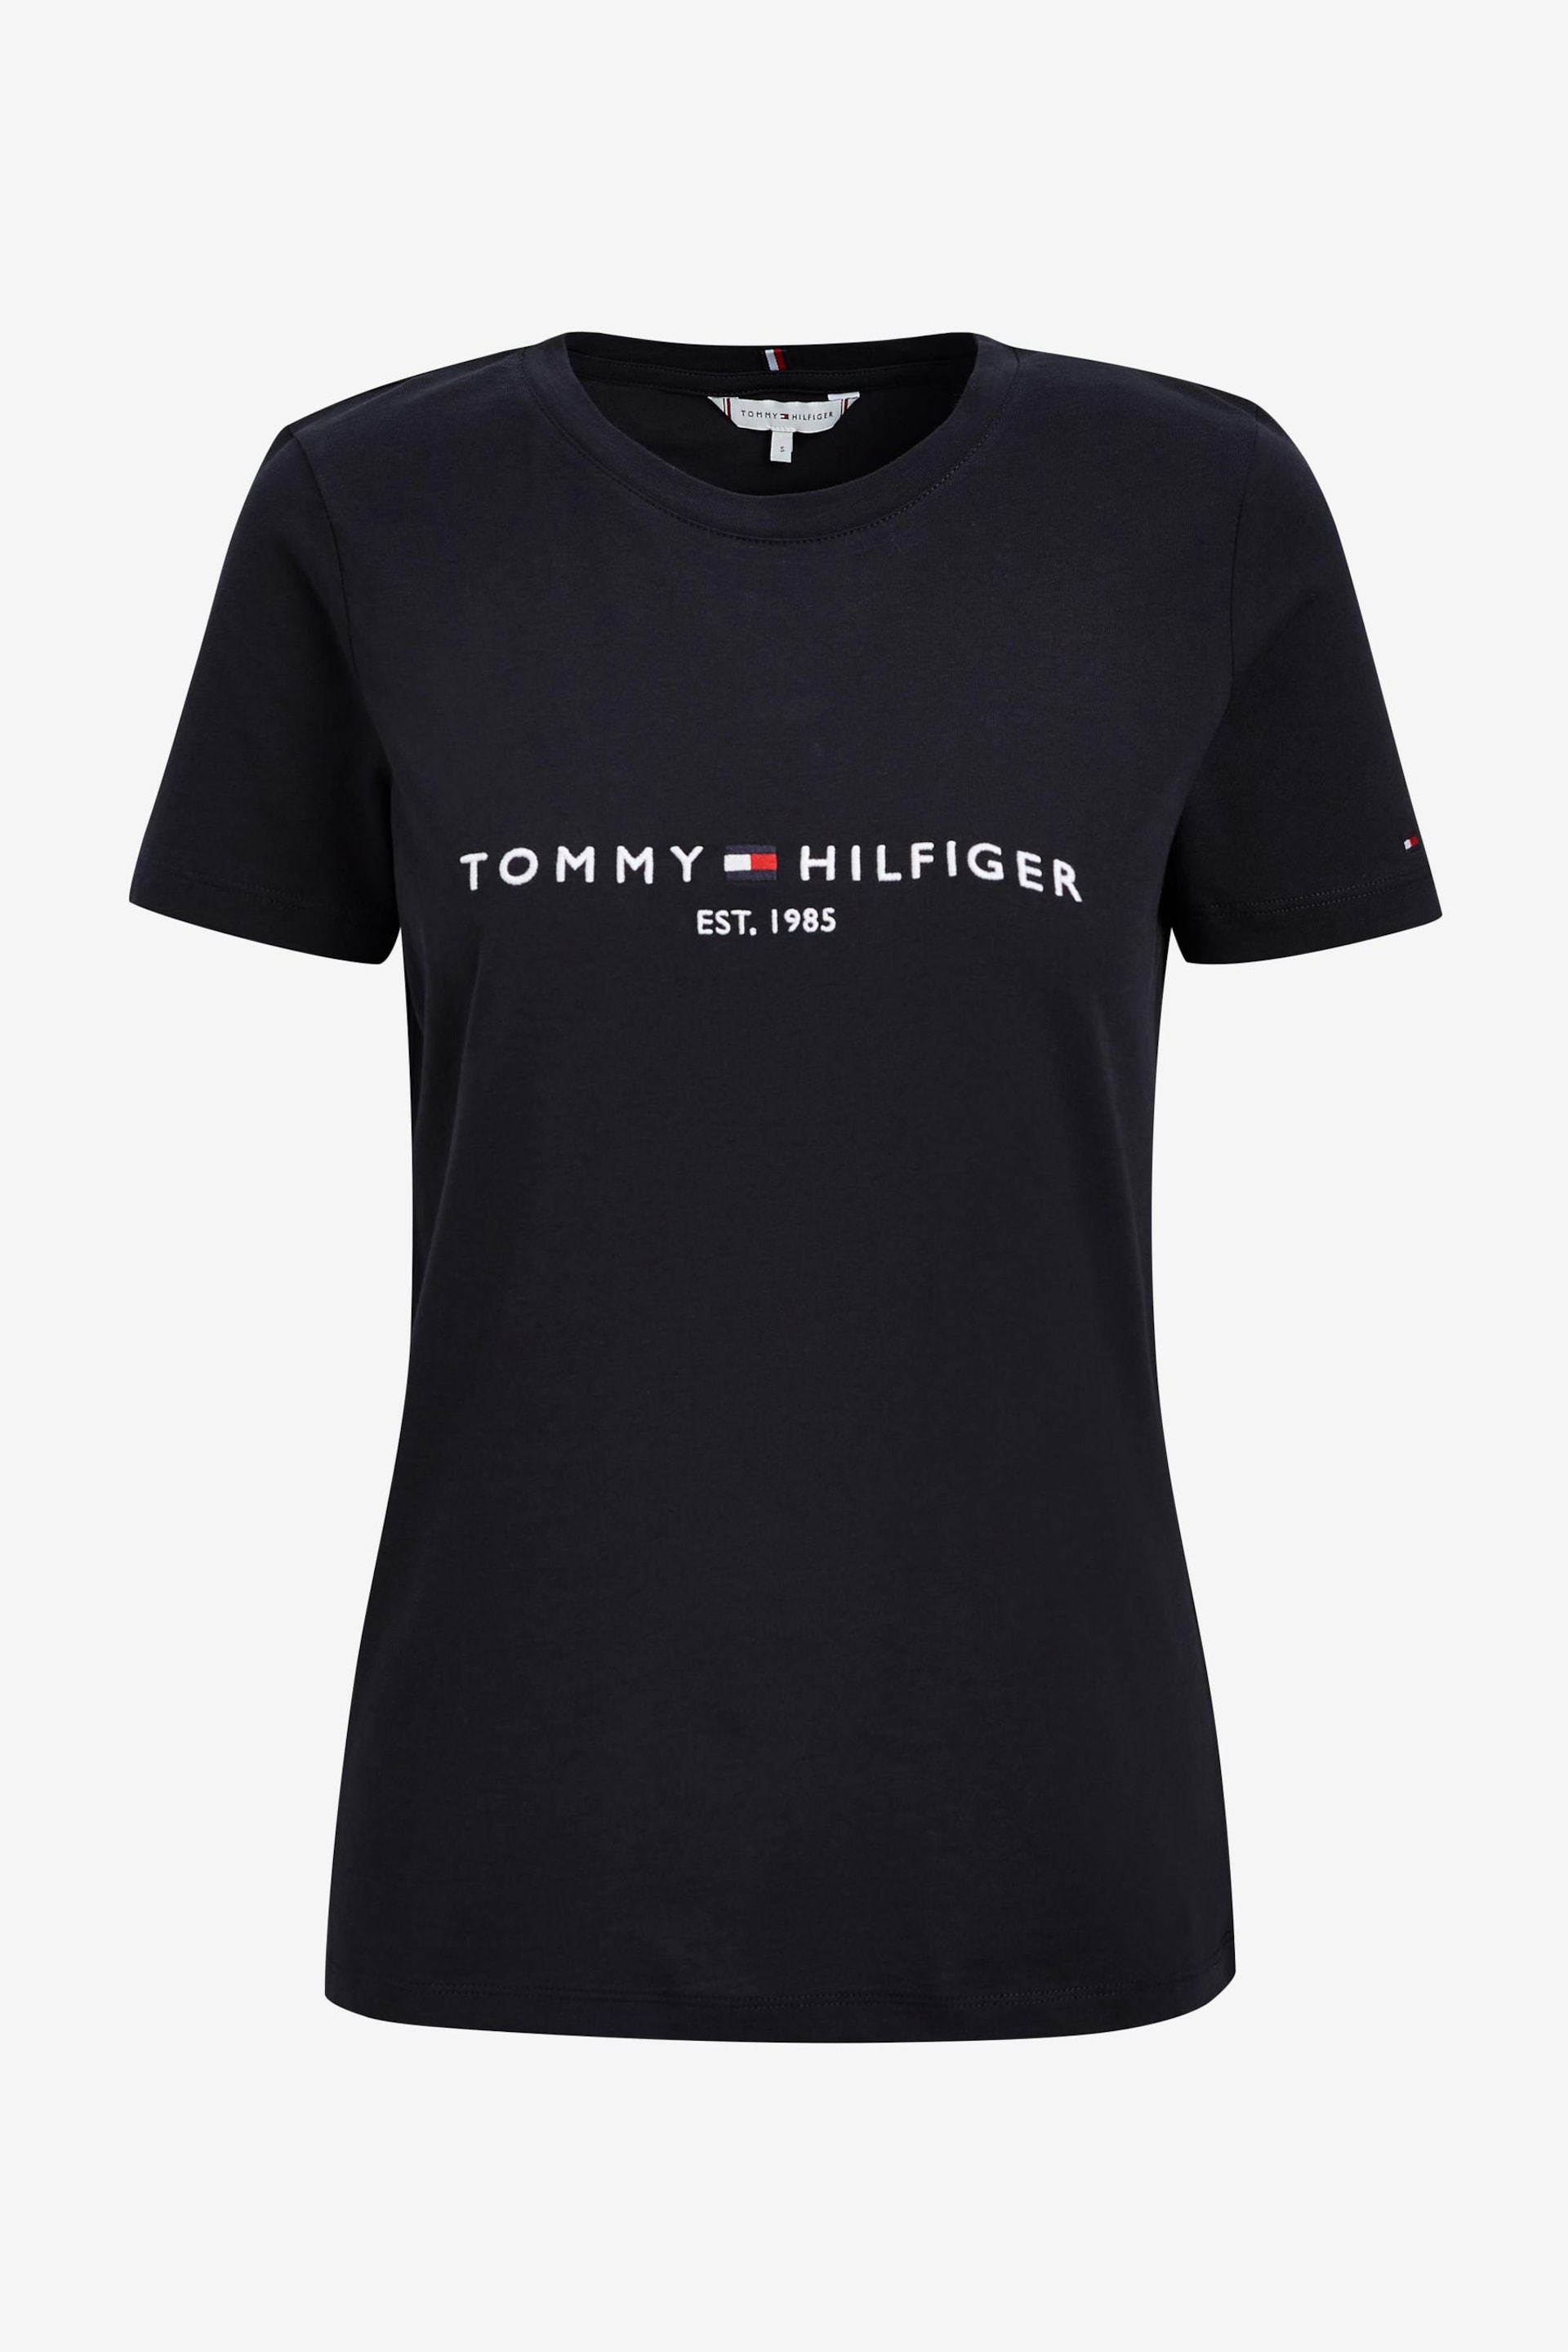 Tommy Hilfiger White Heritage Logo T-Shirt - Image 4 of 4